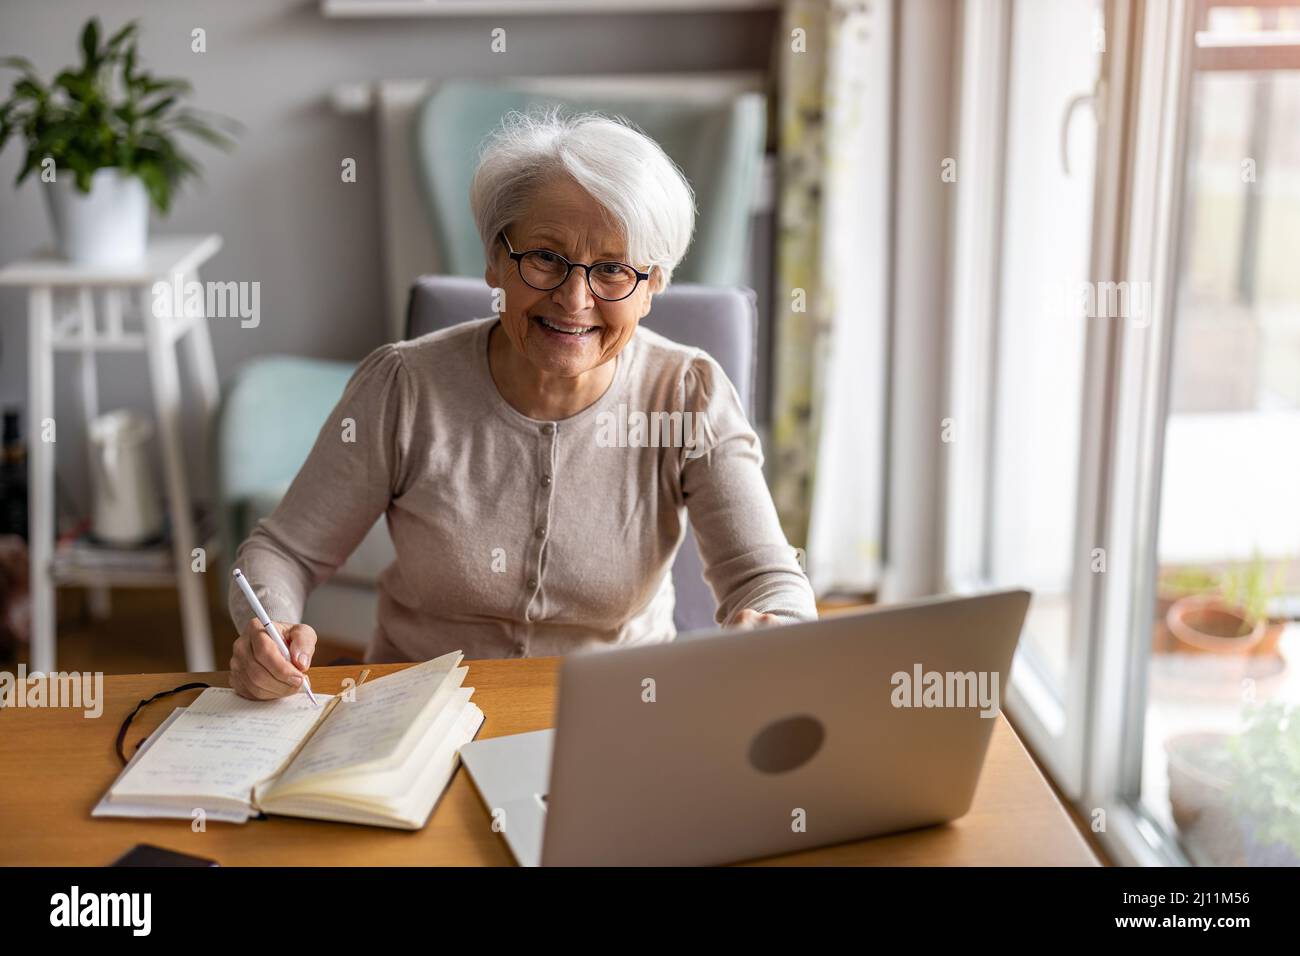 Senior woman using laptop at home Stock Photo